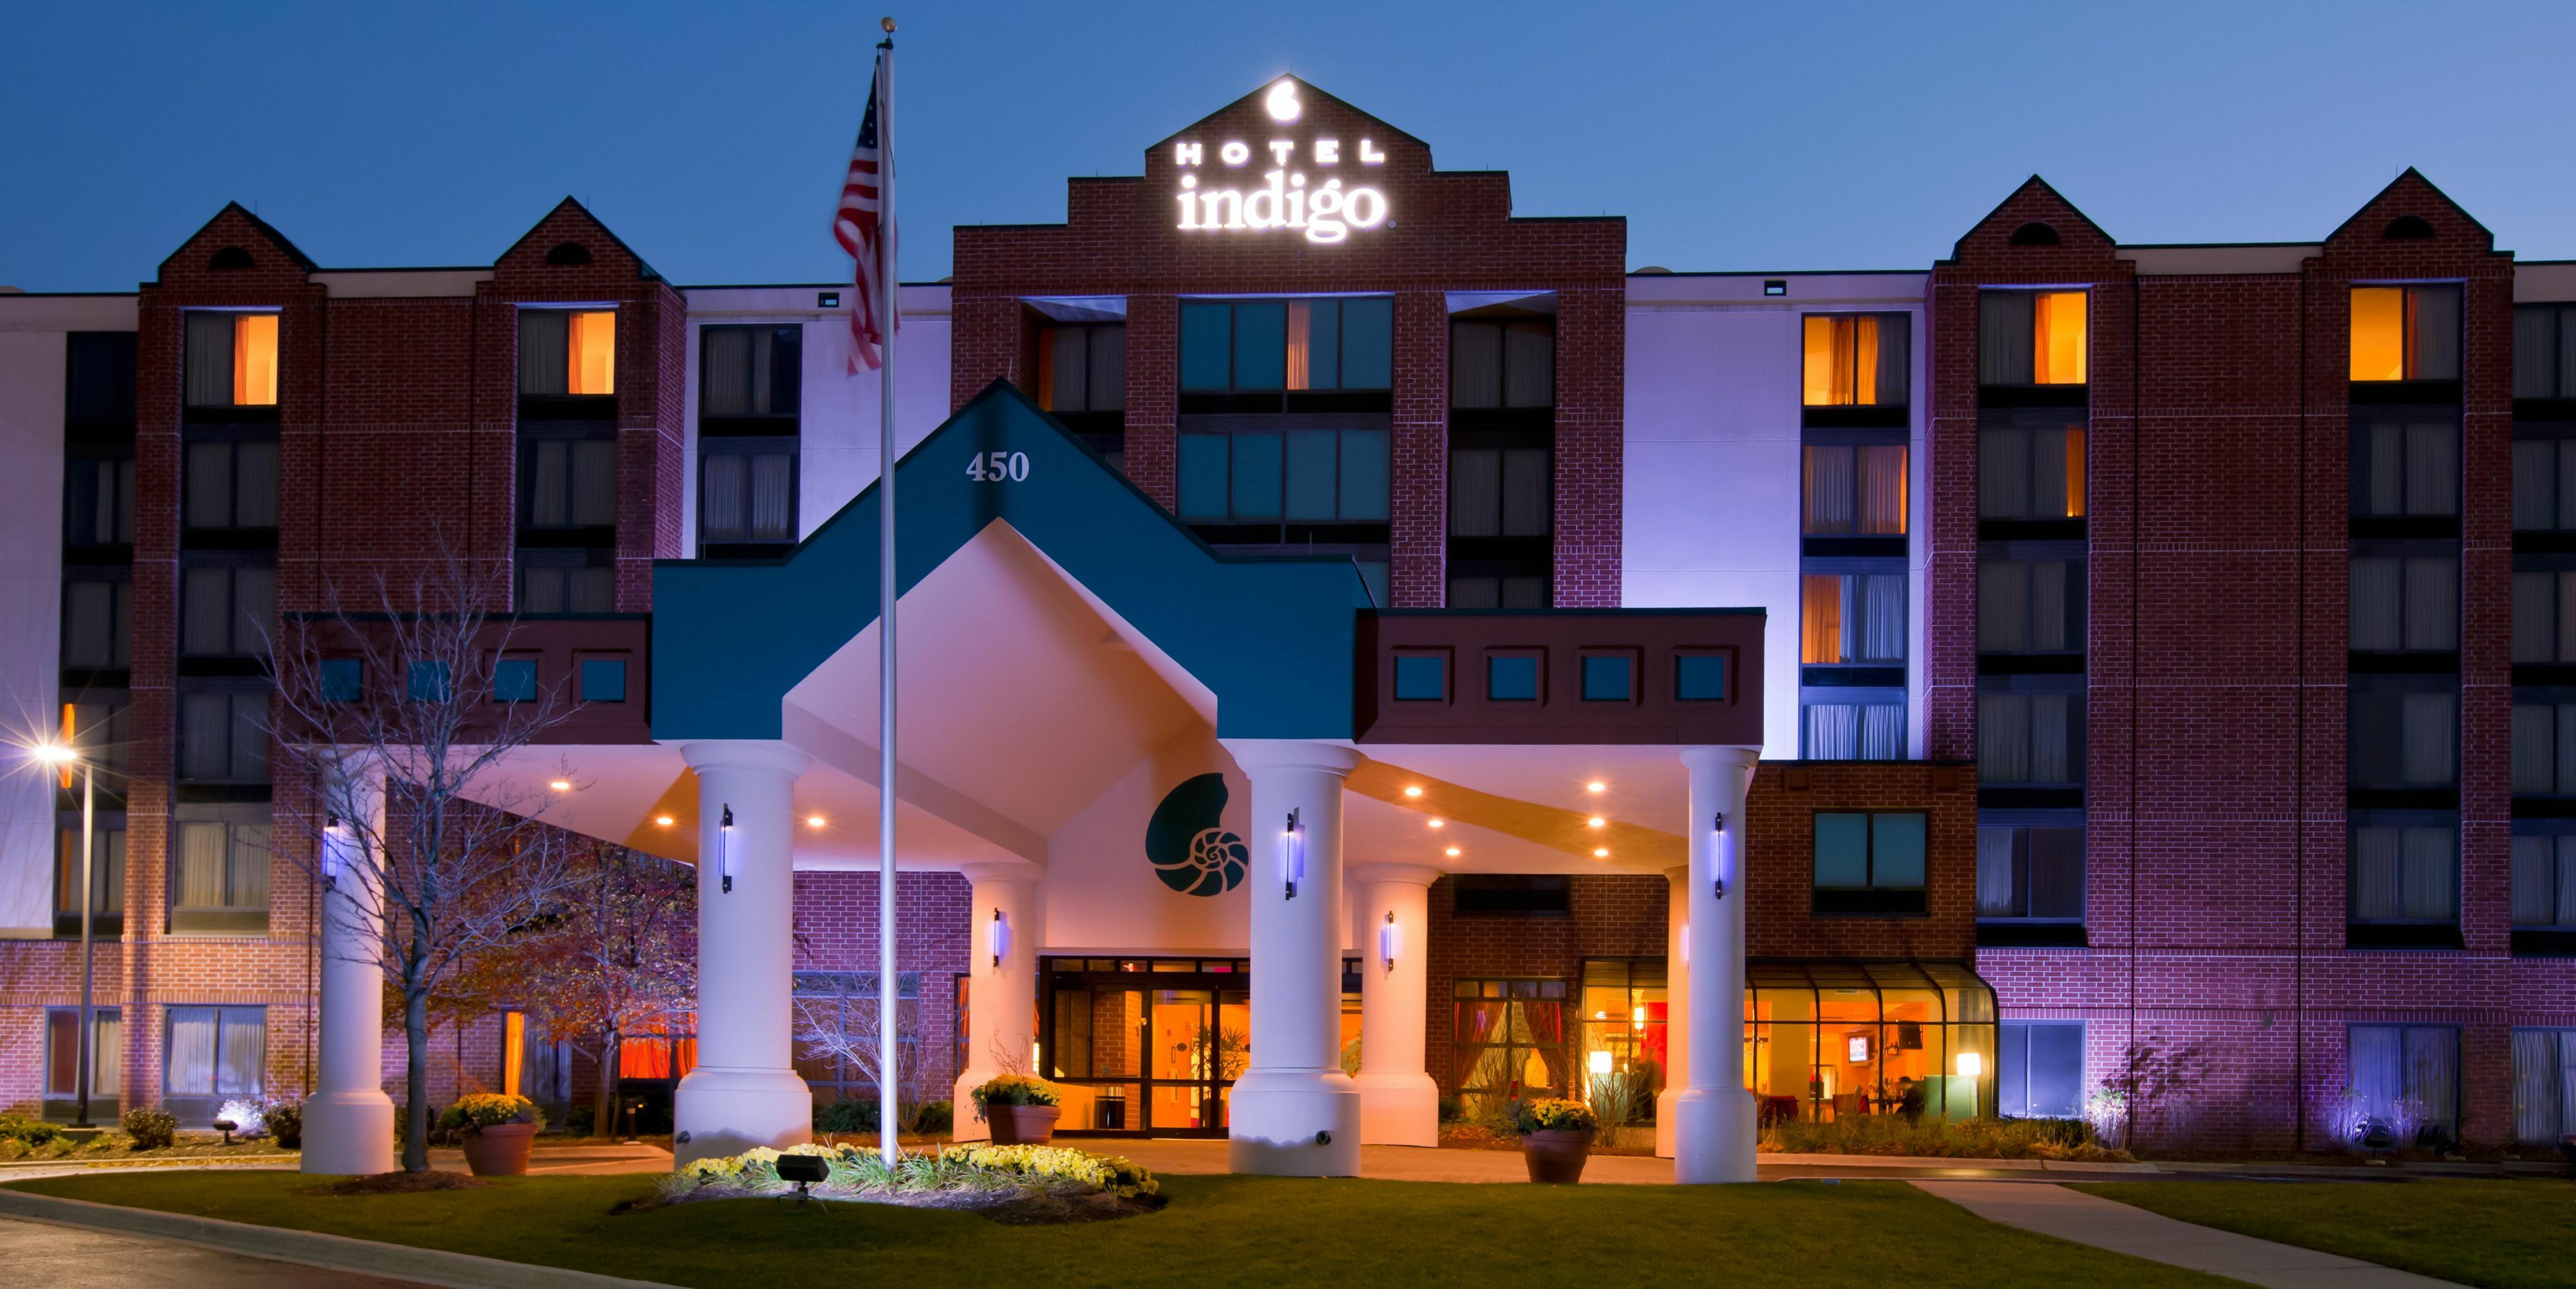 Photo of Hotel Indigo Chicago-Vernon Hills, Vernon Hills, IL